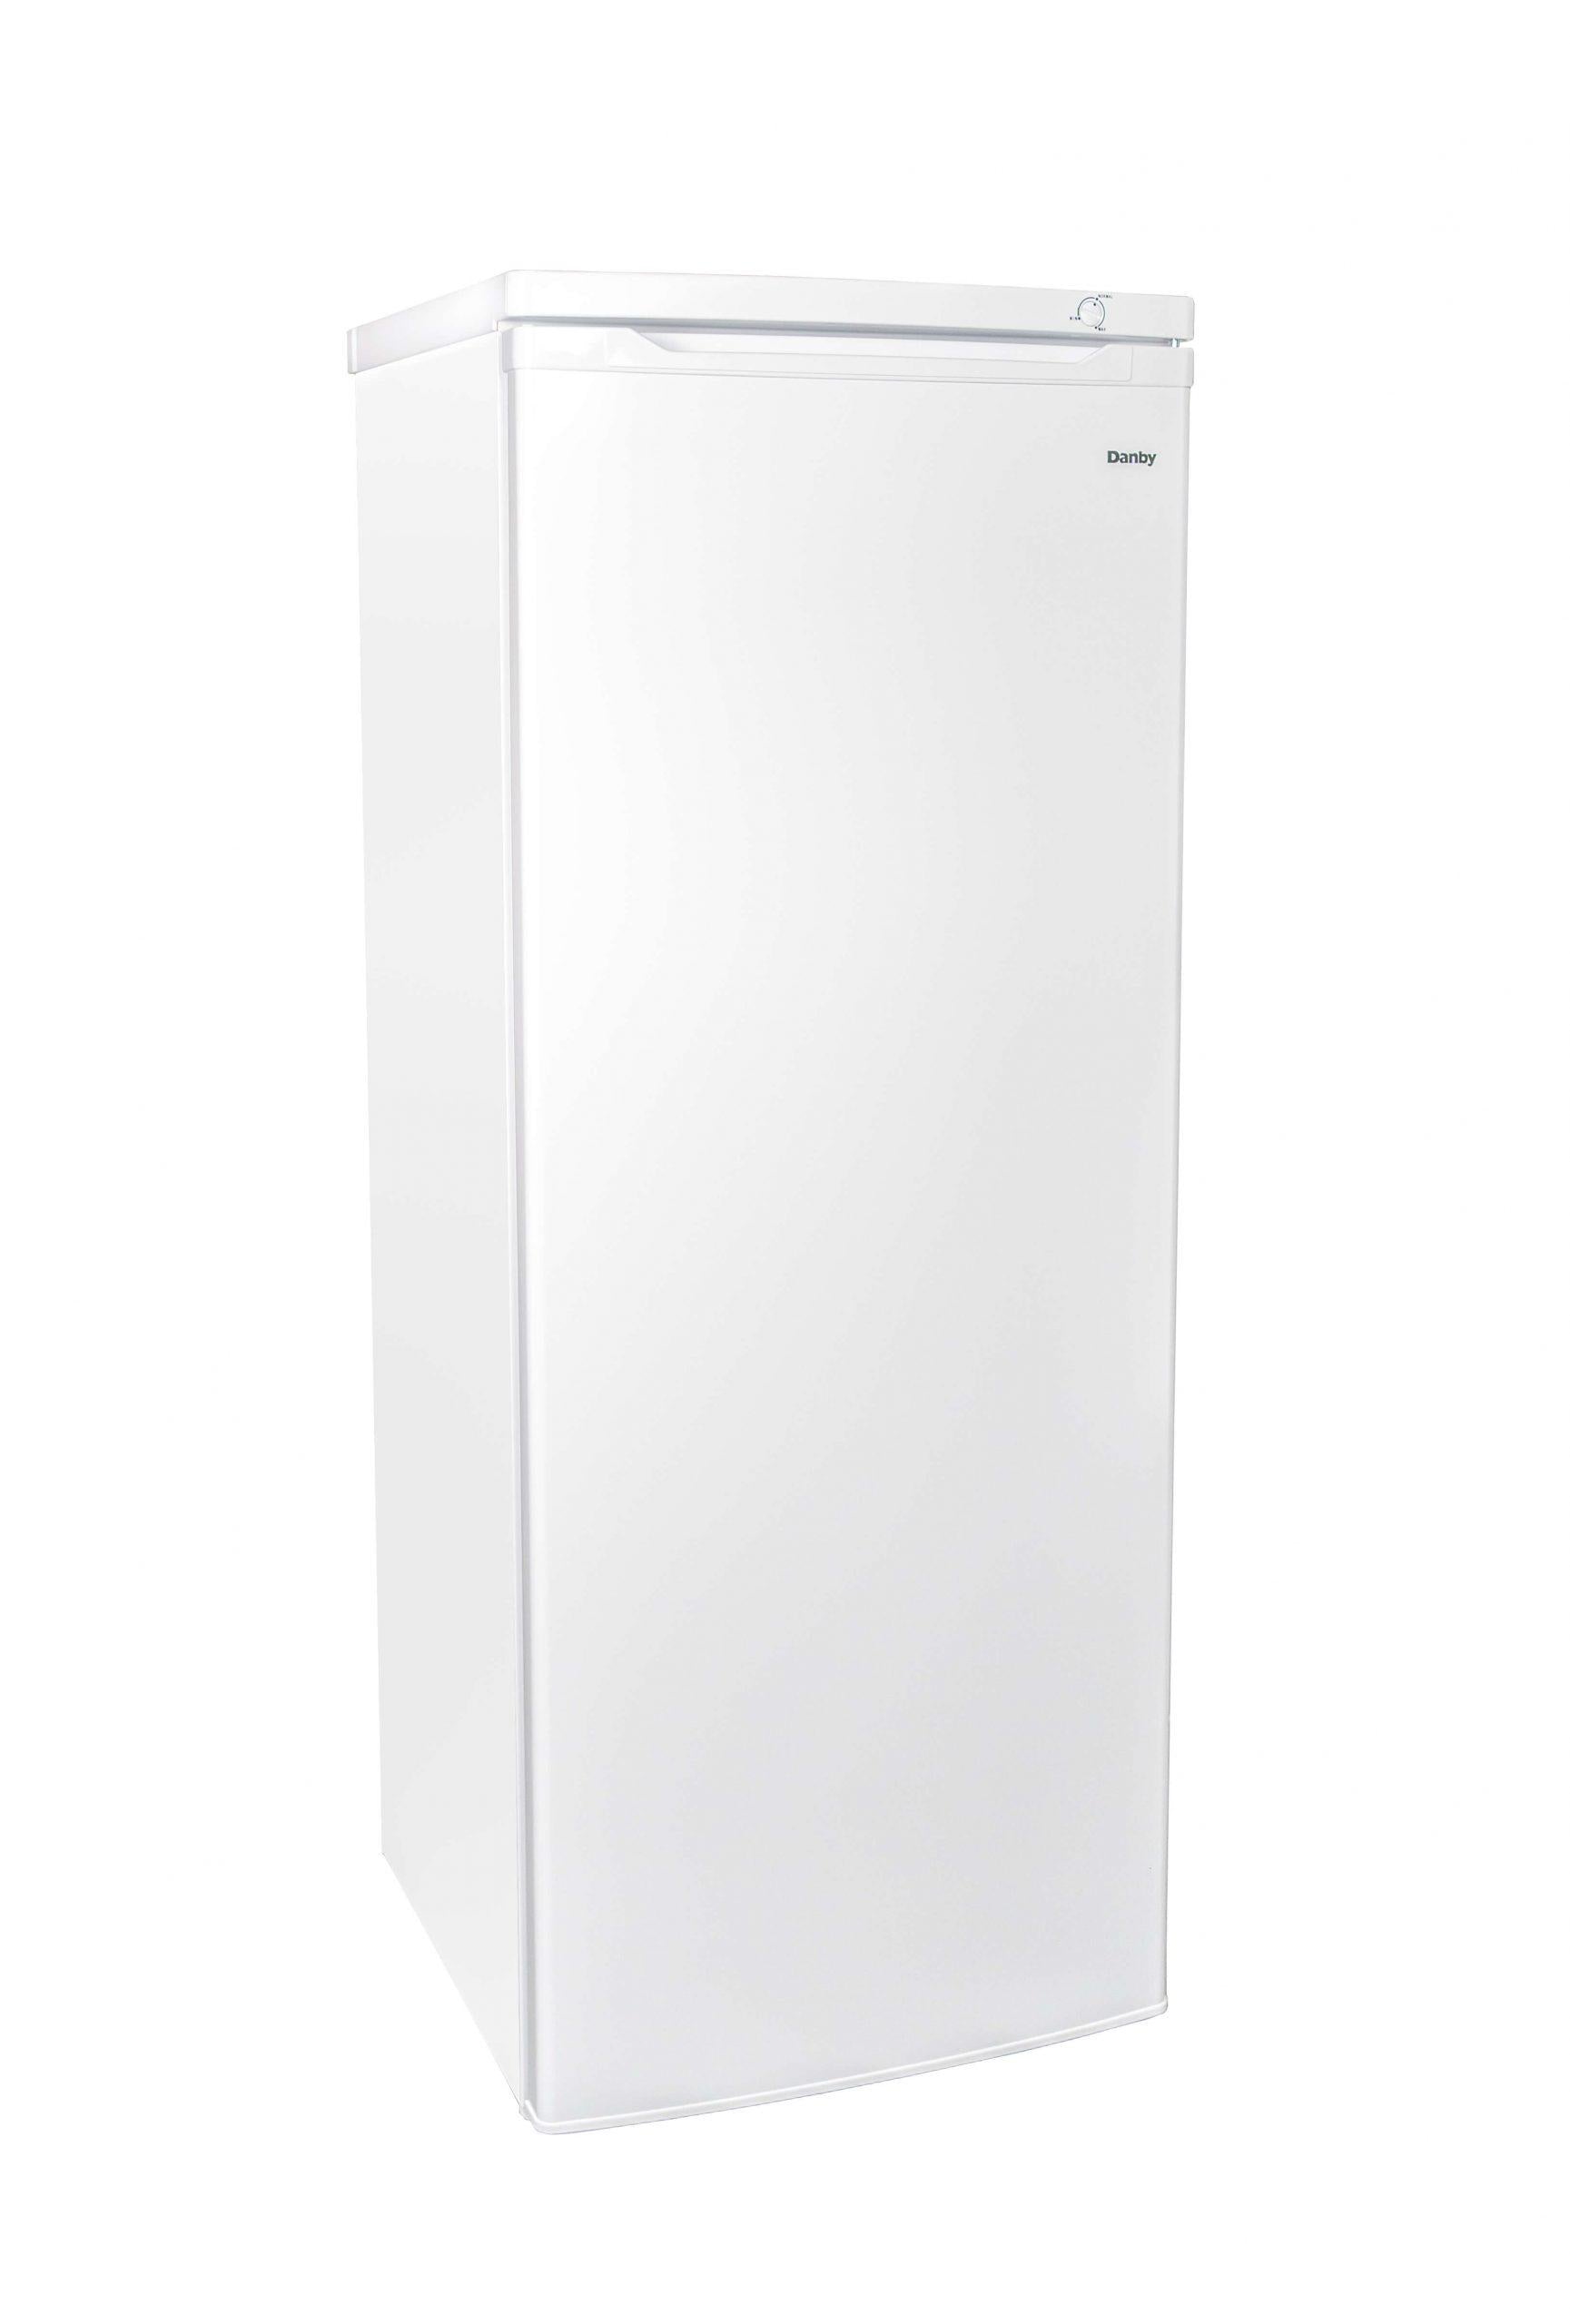 Danby DUFM060B1WDB Danby 6.0 Cu Ft White Upright Freezer